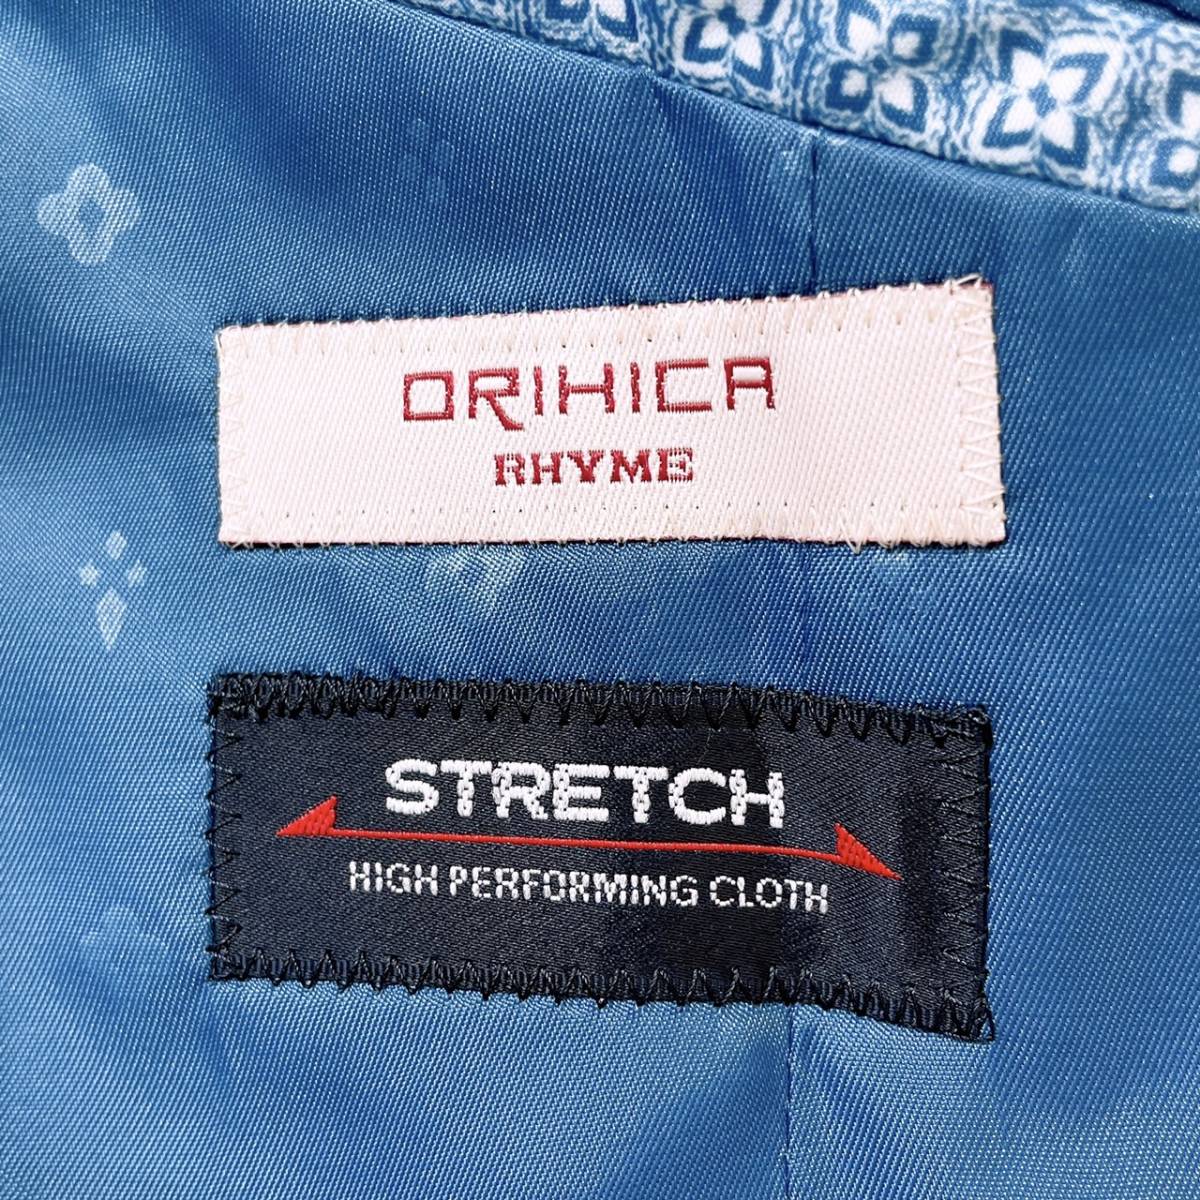 【01988】 ORIHICA オリヒカ スーツ 上下スーツセット セットアップ ジャケット パンツ シングルボタン 裏地 グレー 上7 XS 下 9 S